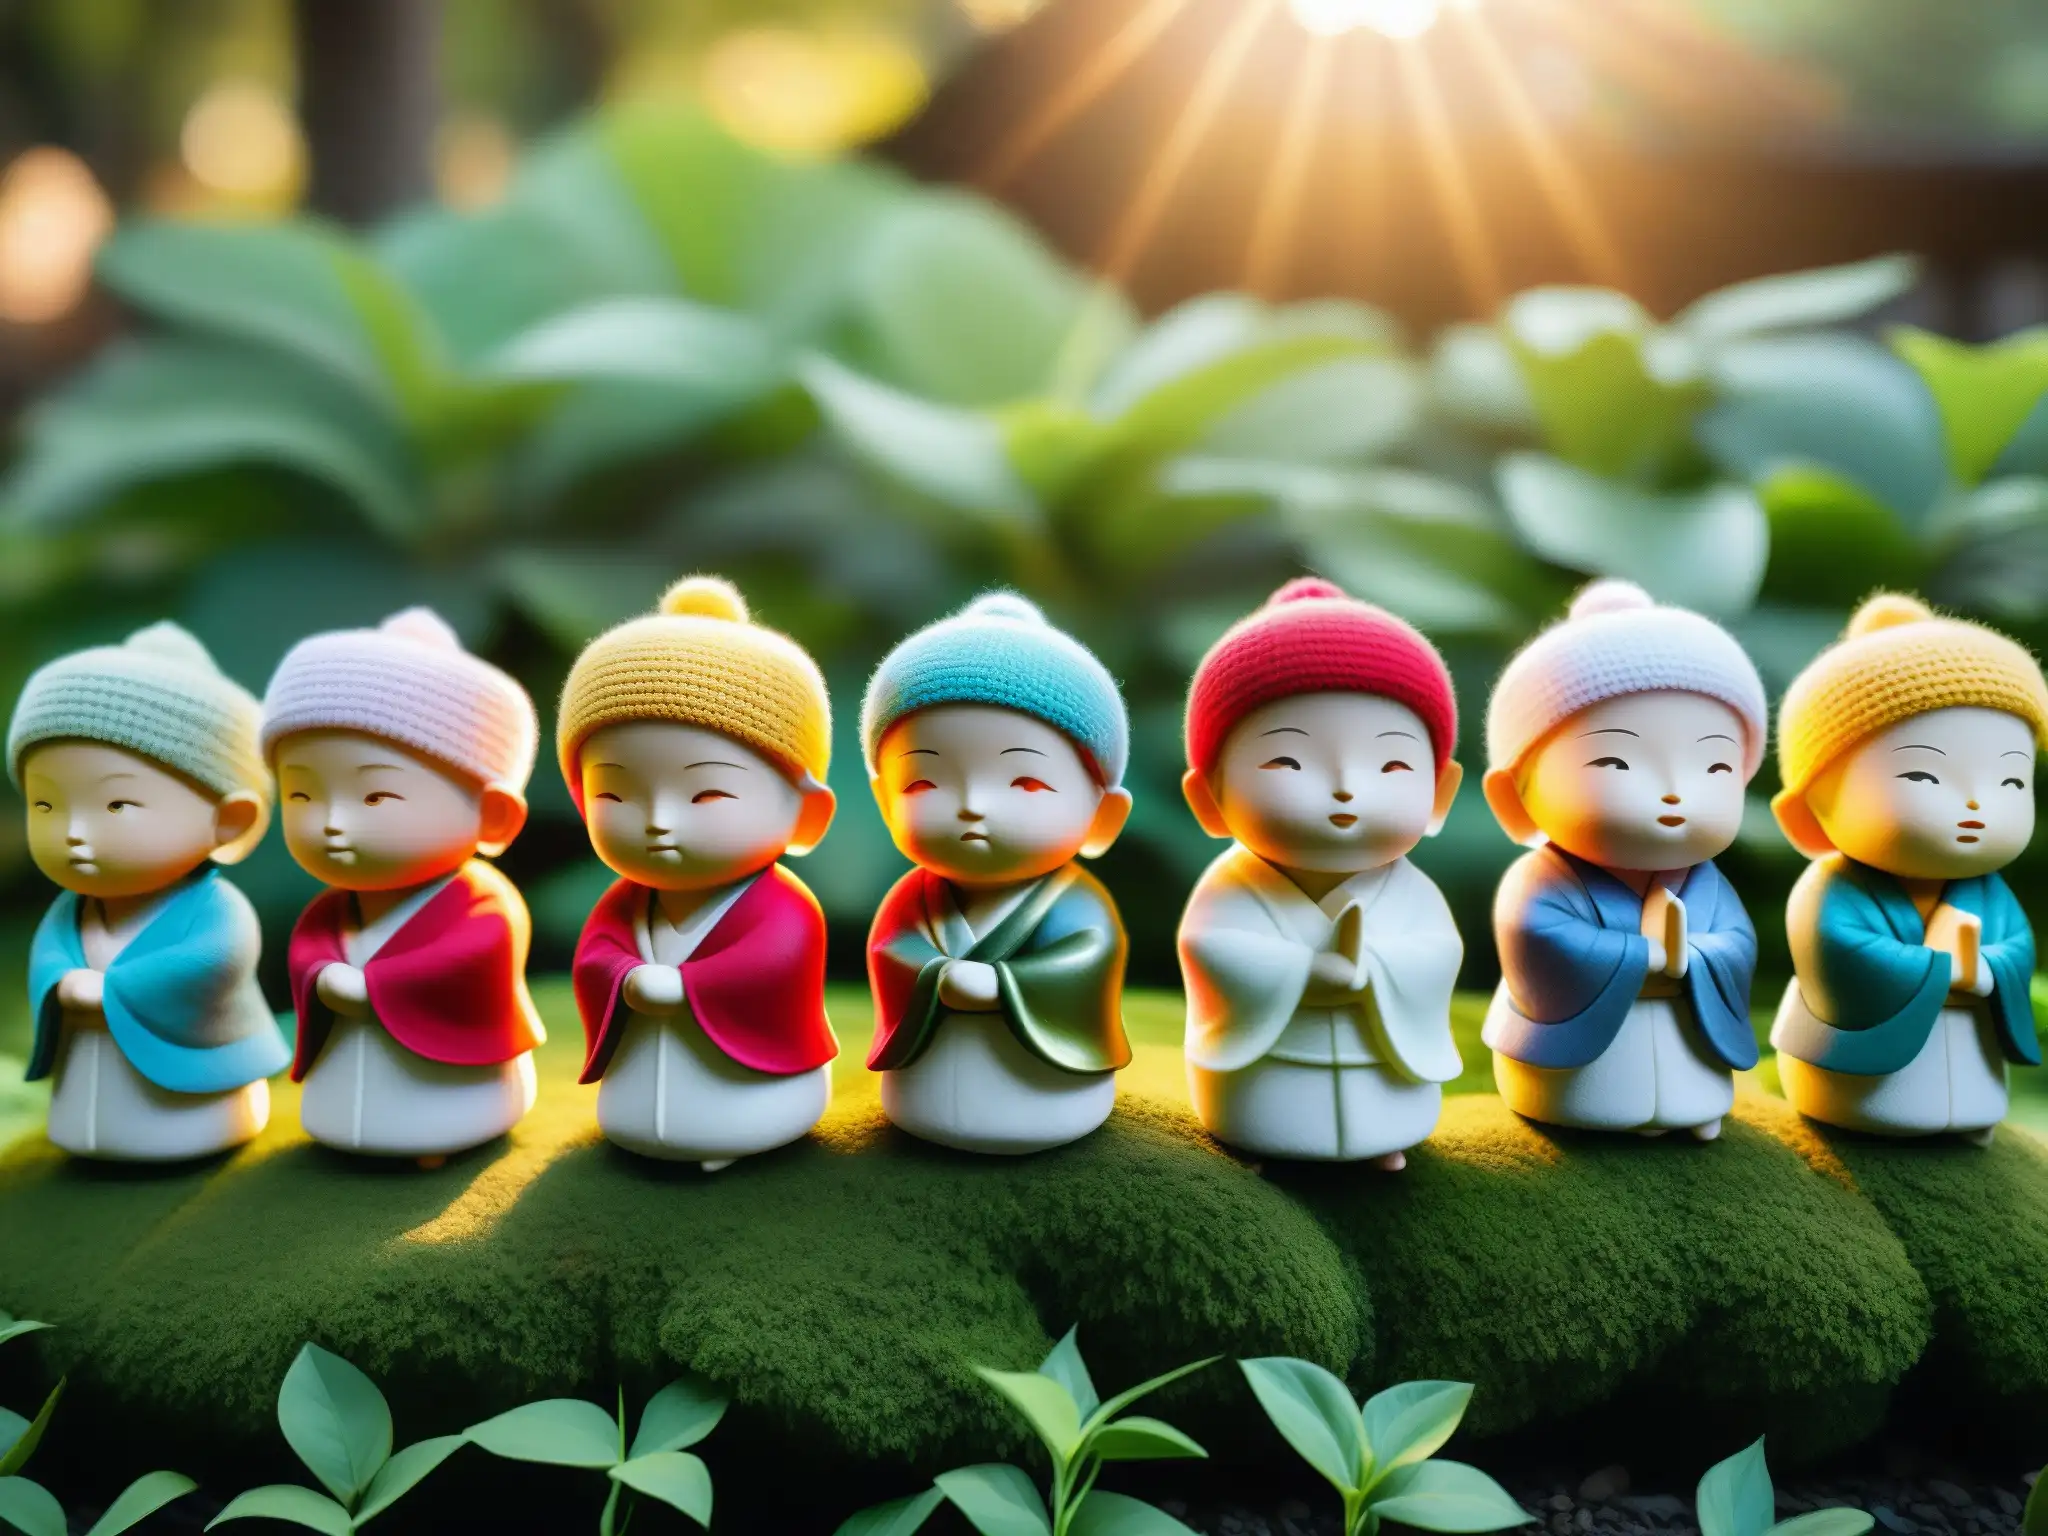 Un grupo de estatuas Jizo que lloran, rodeadas de naturaleza exuberante y ofrendas, evocando paz y compasión